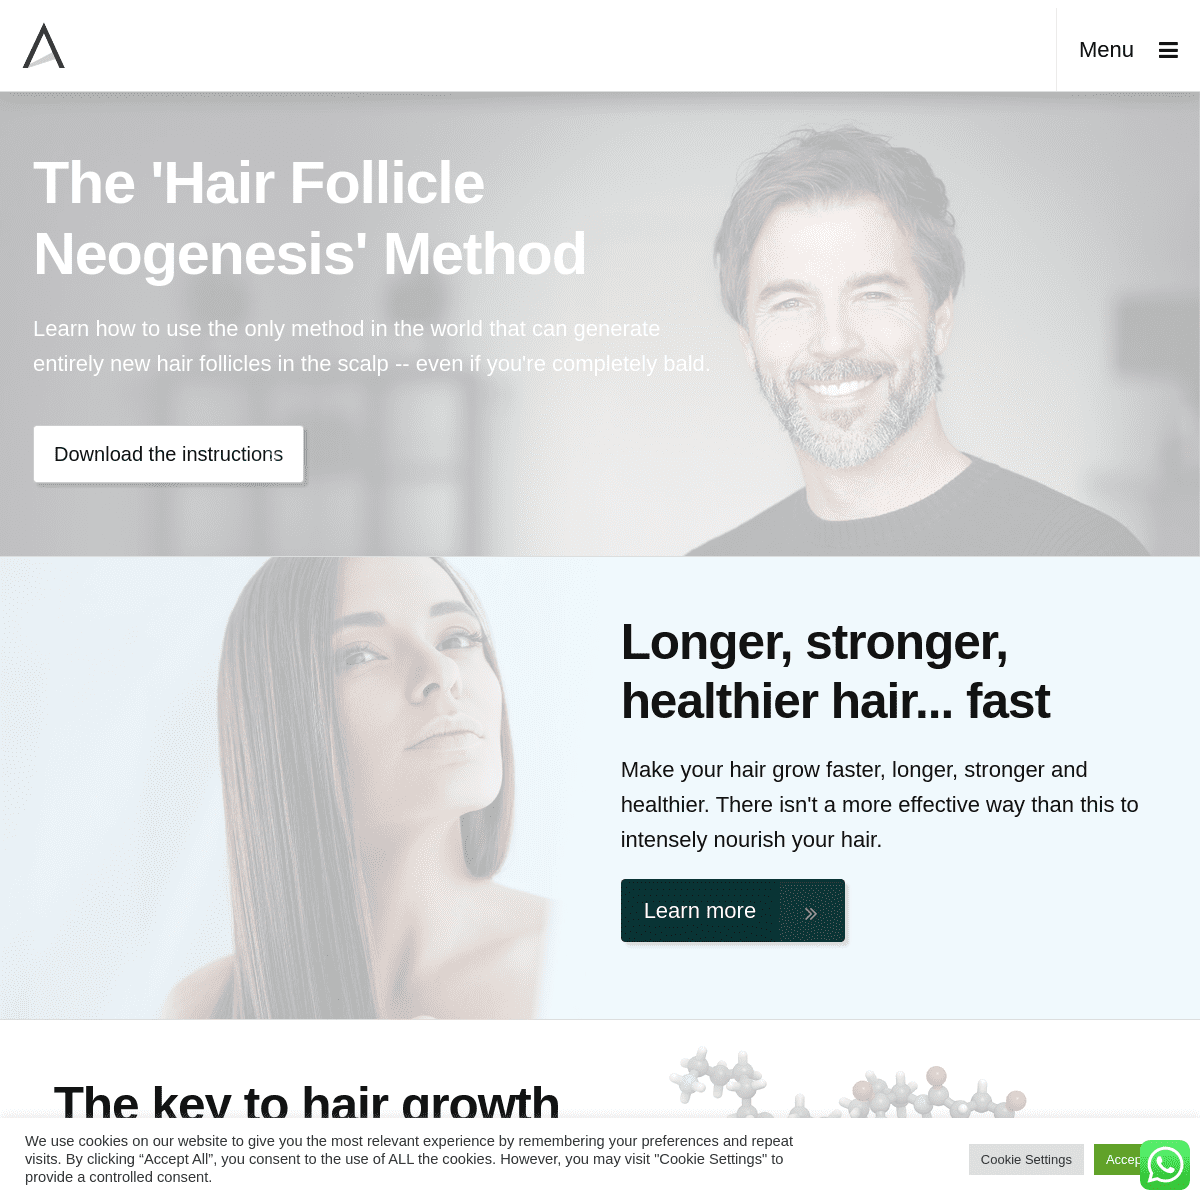 A complete backup of https://hairfollicleneogenesis.com